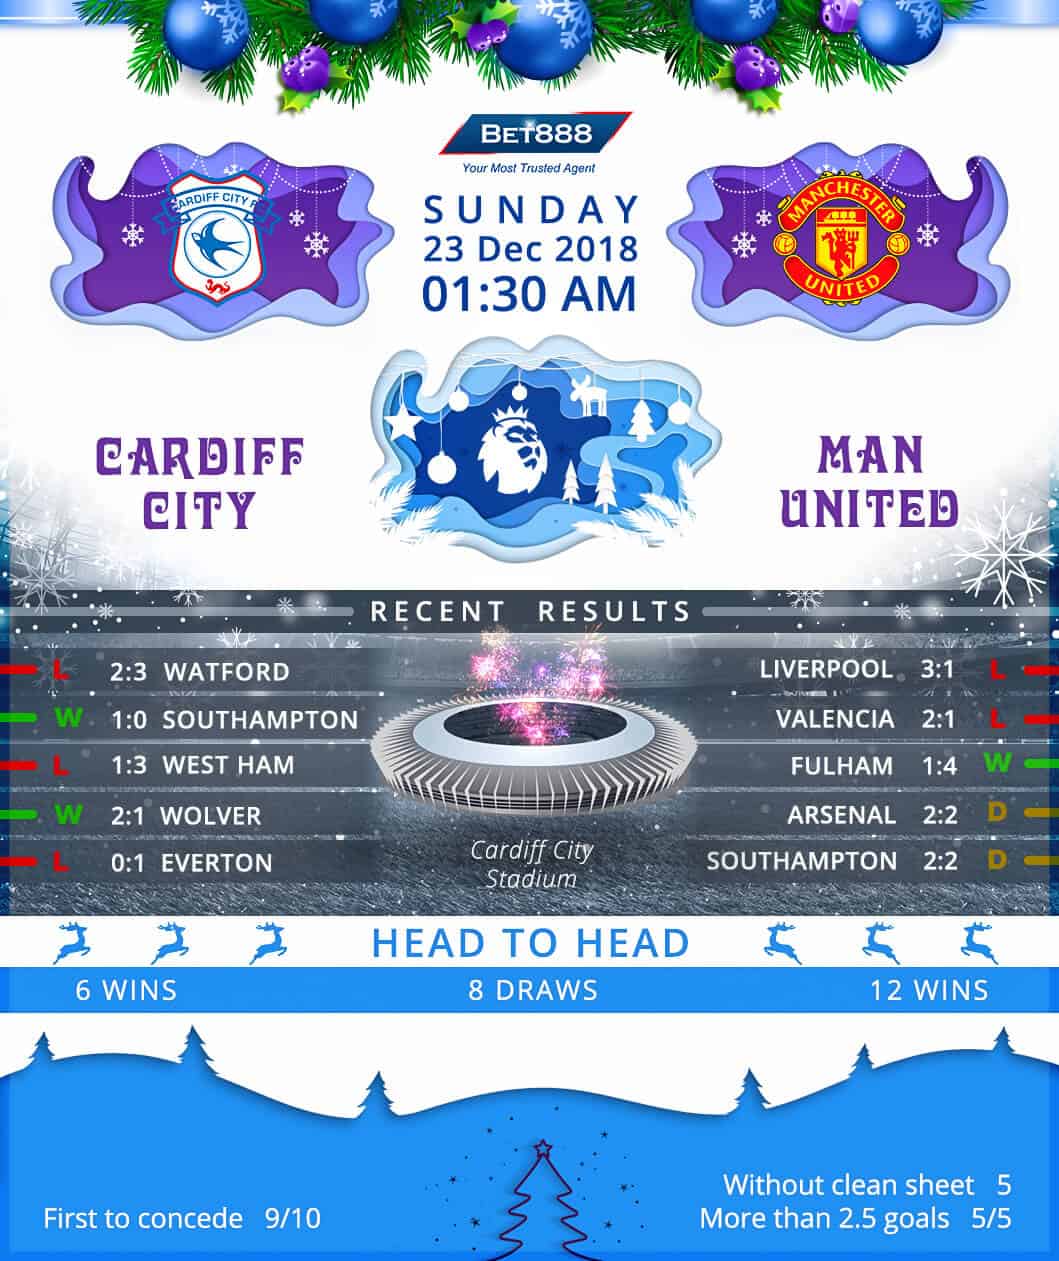 Cardiff City vs Manchester United 23/12/18